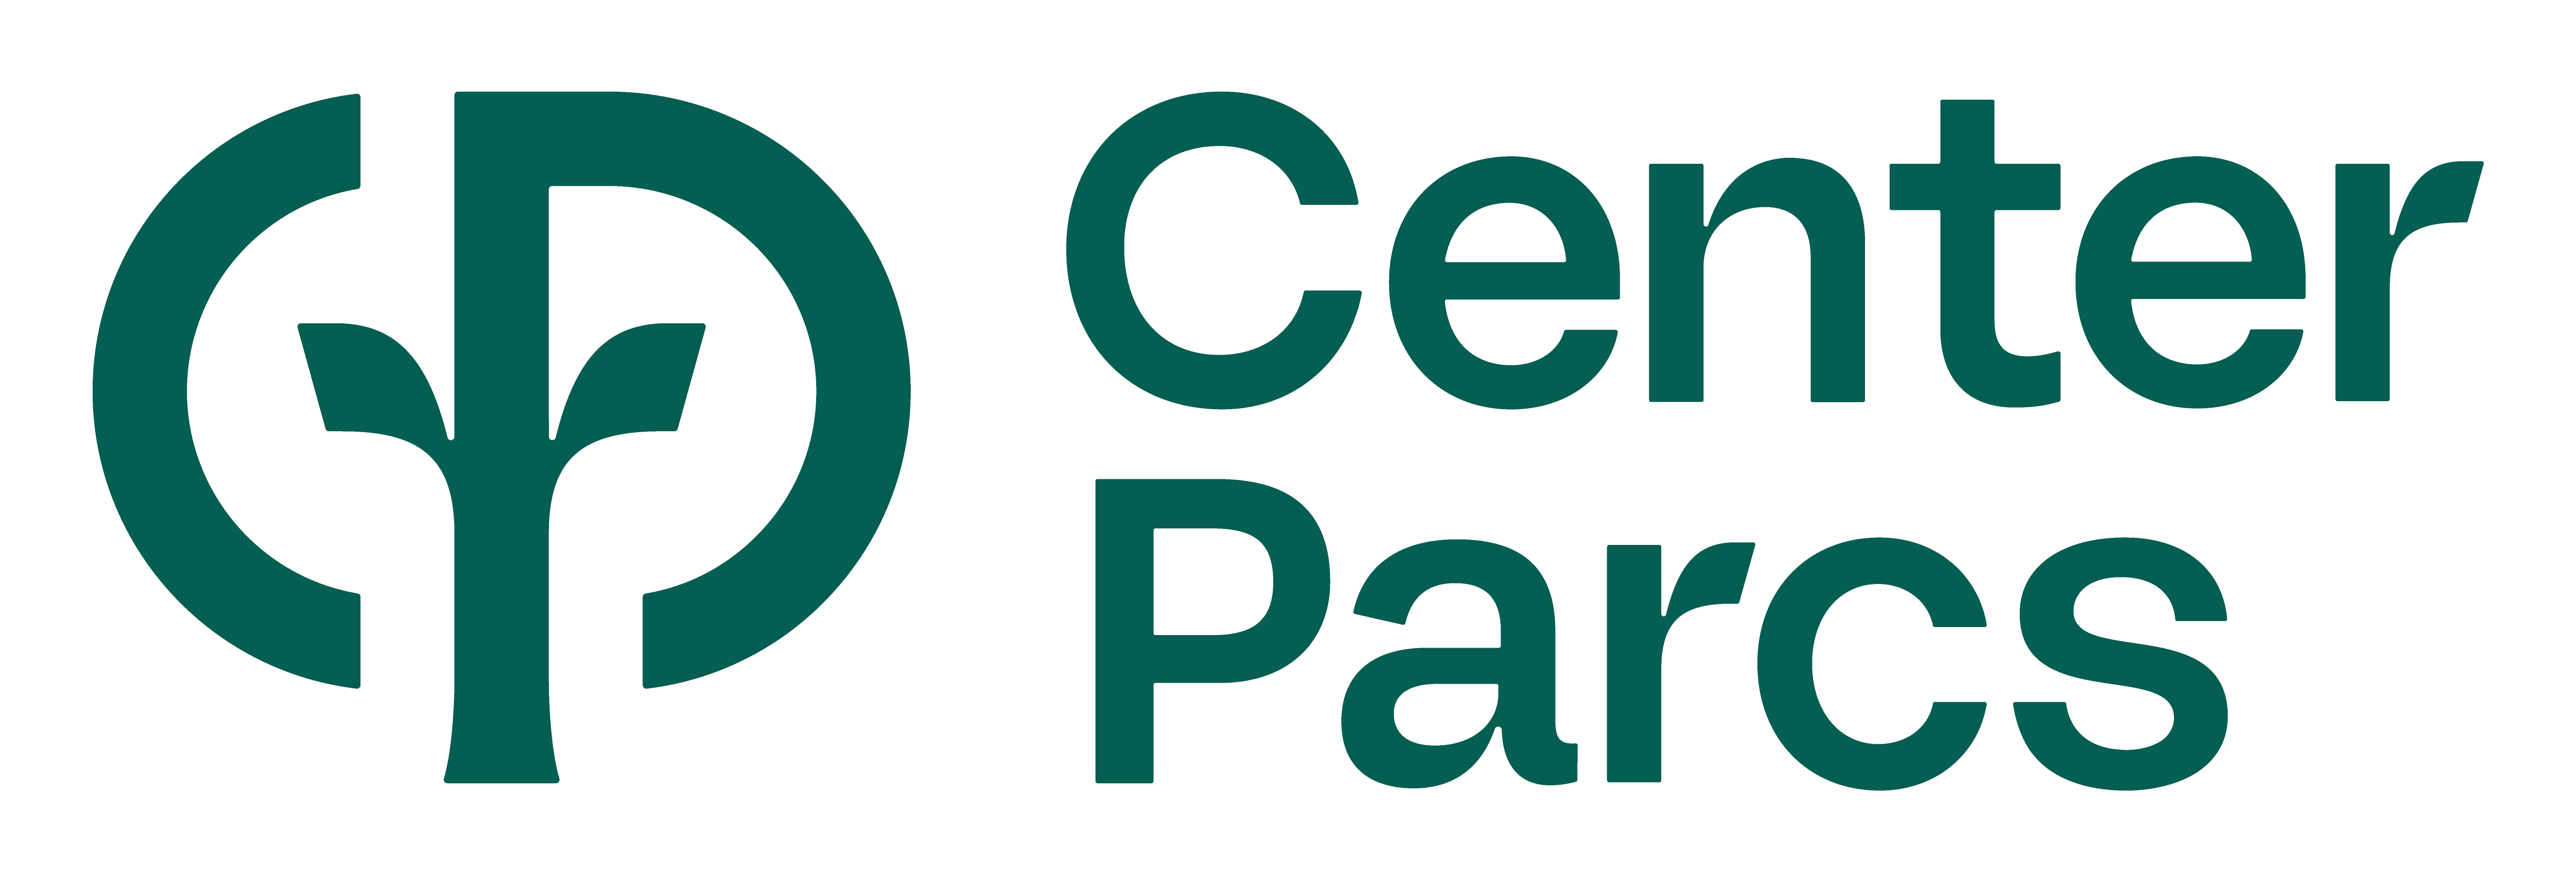 center-parcs-nieuwe-logo.png